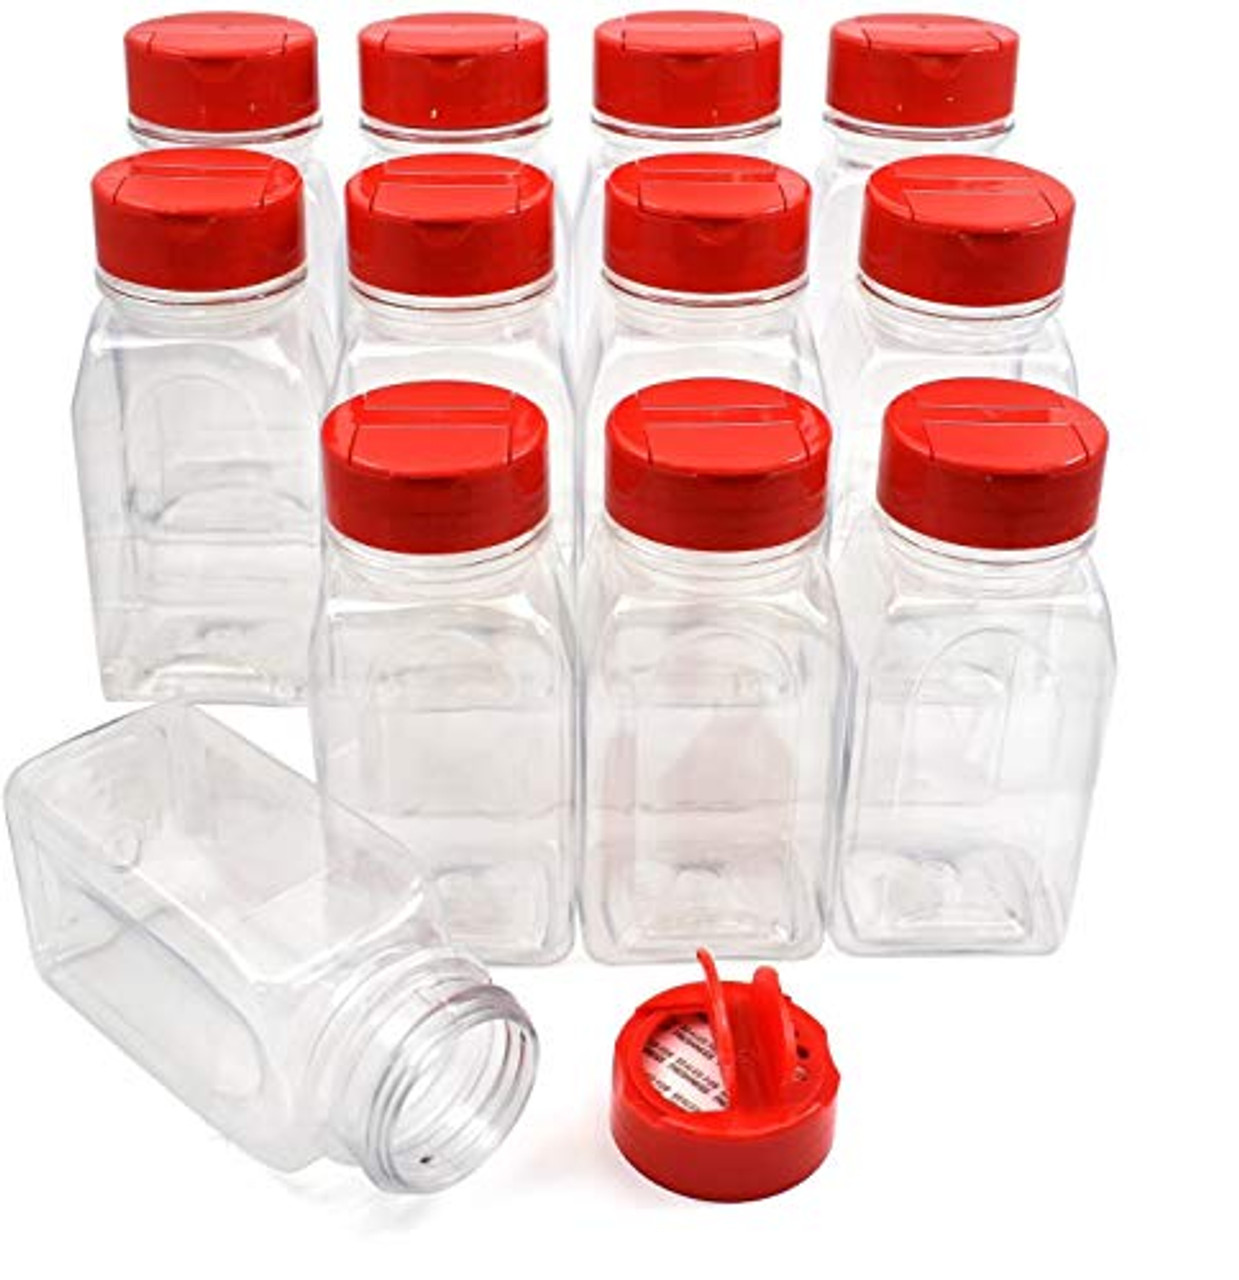 Colorful Cap Spice Jar Plastic Bottle Spice Shaker Container